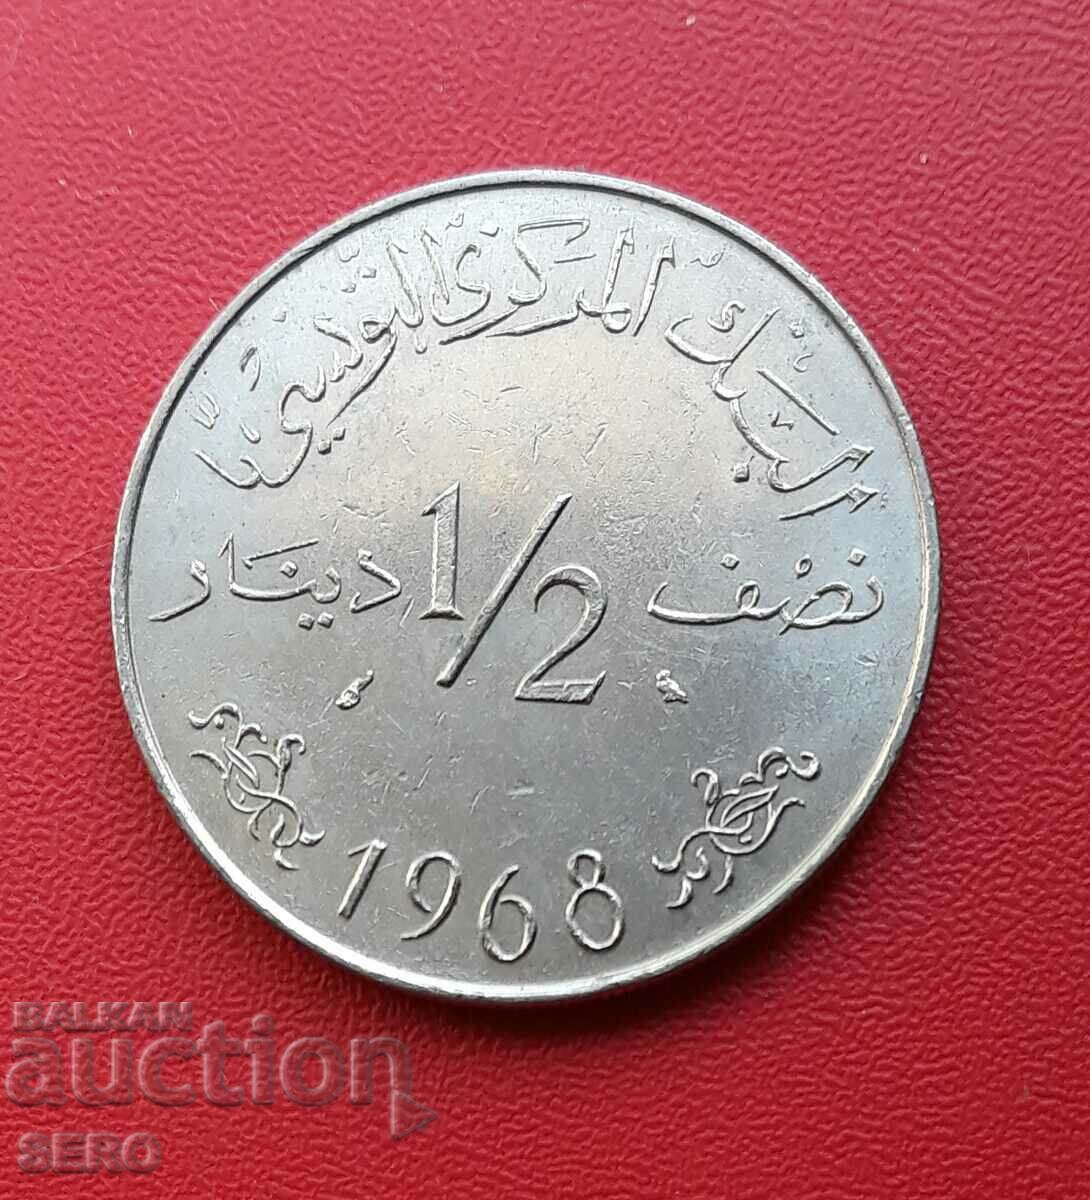 Tunisia-1/2 dinar 1968-small mintage and rare